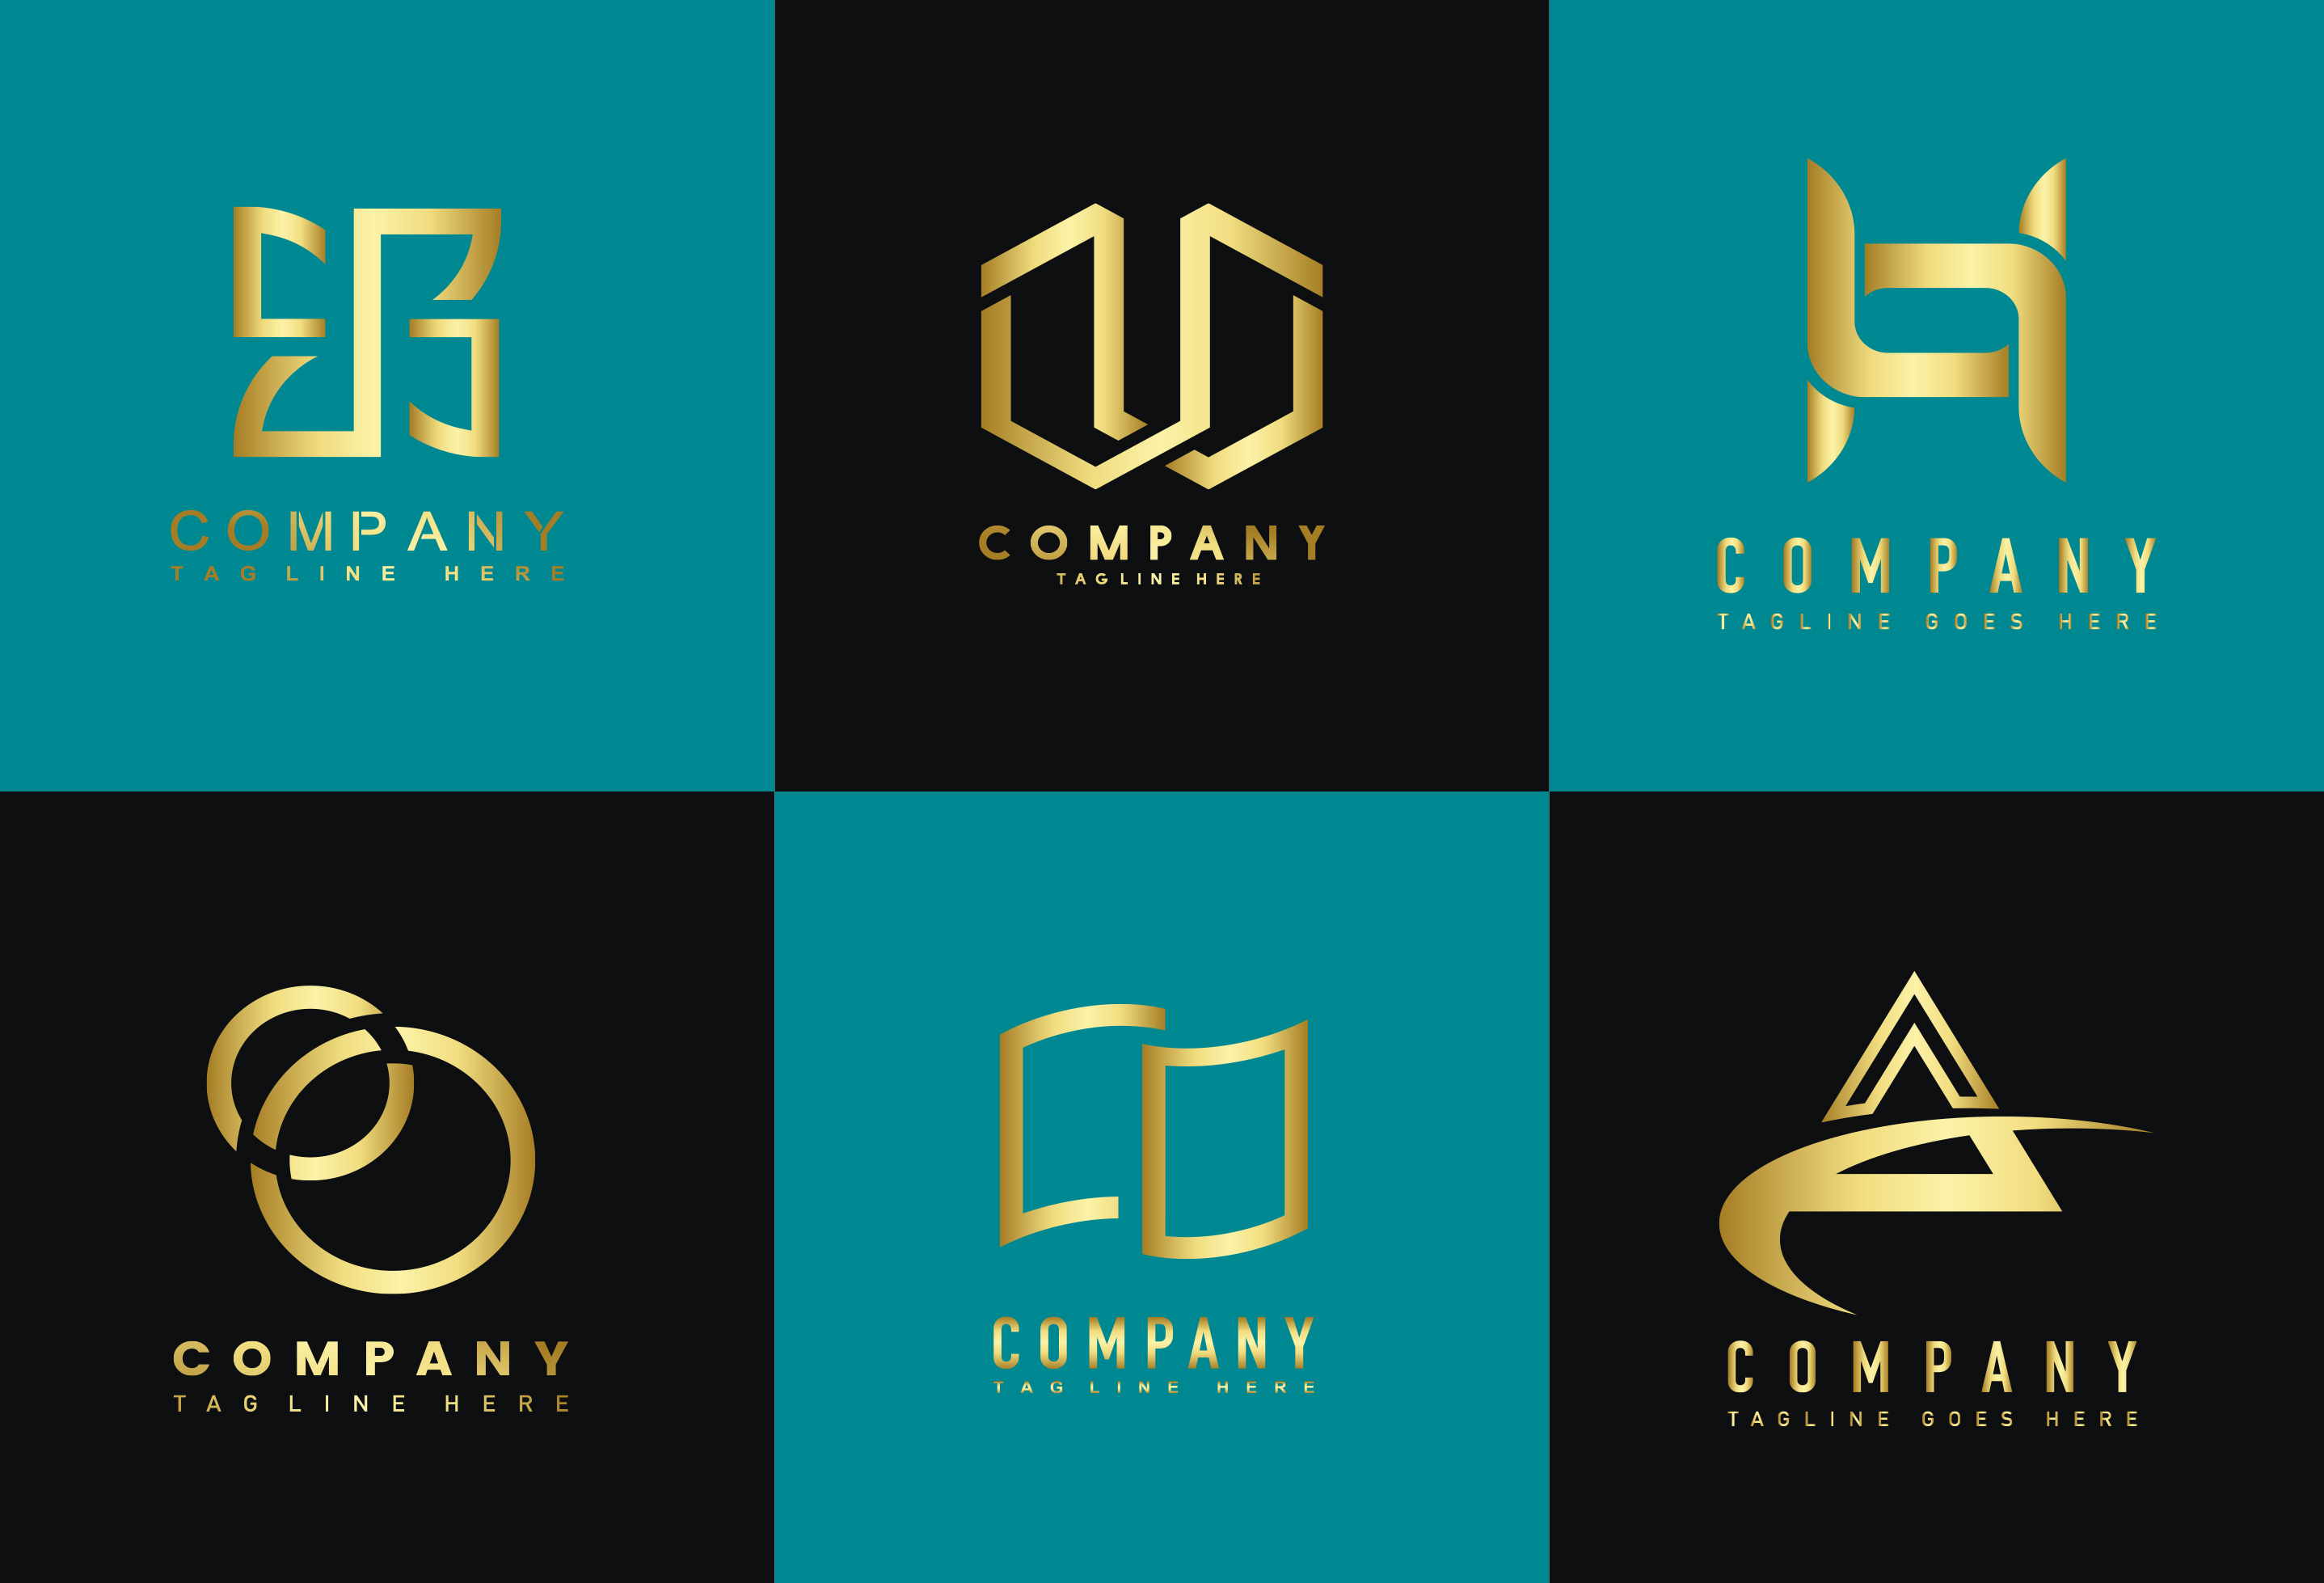 I will make modern flat minimalist logo and branding design for $2 ...